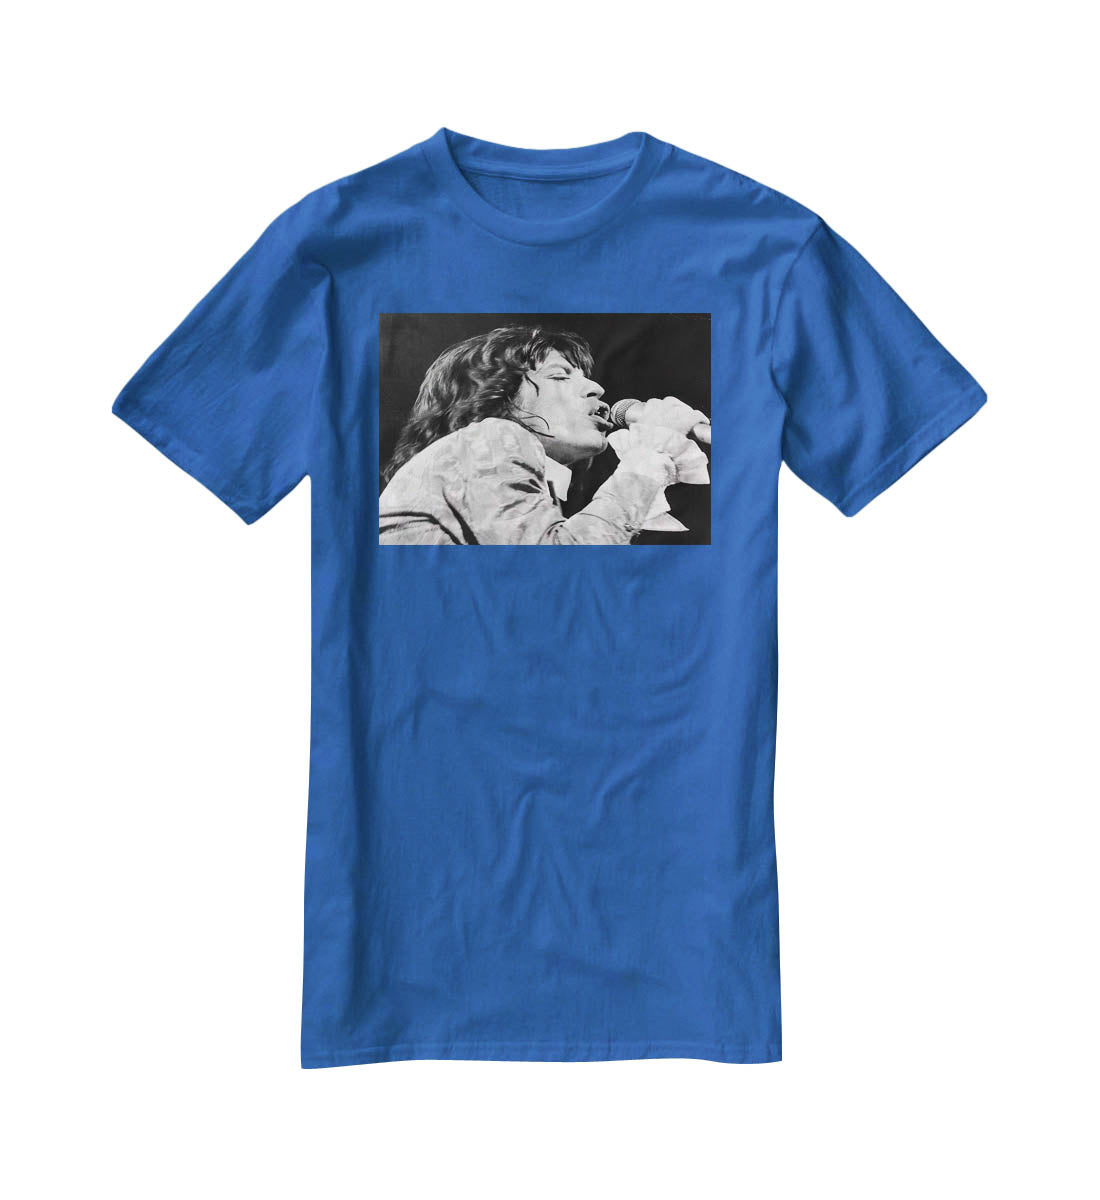 Mick Jagger belts it out T-Shirt - Canvas Art Rocks - 2